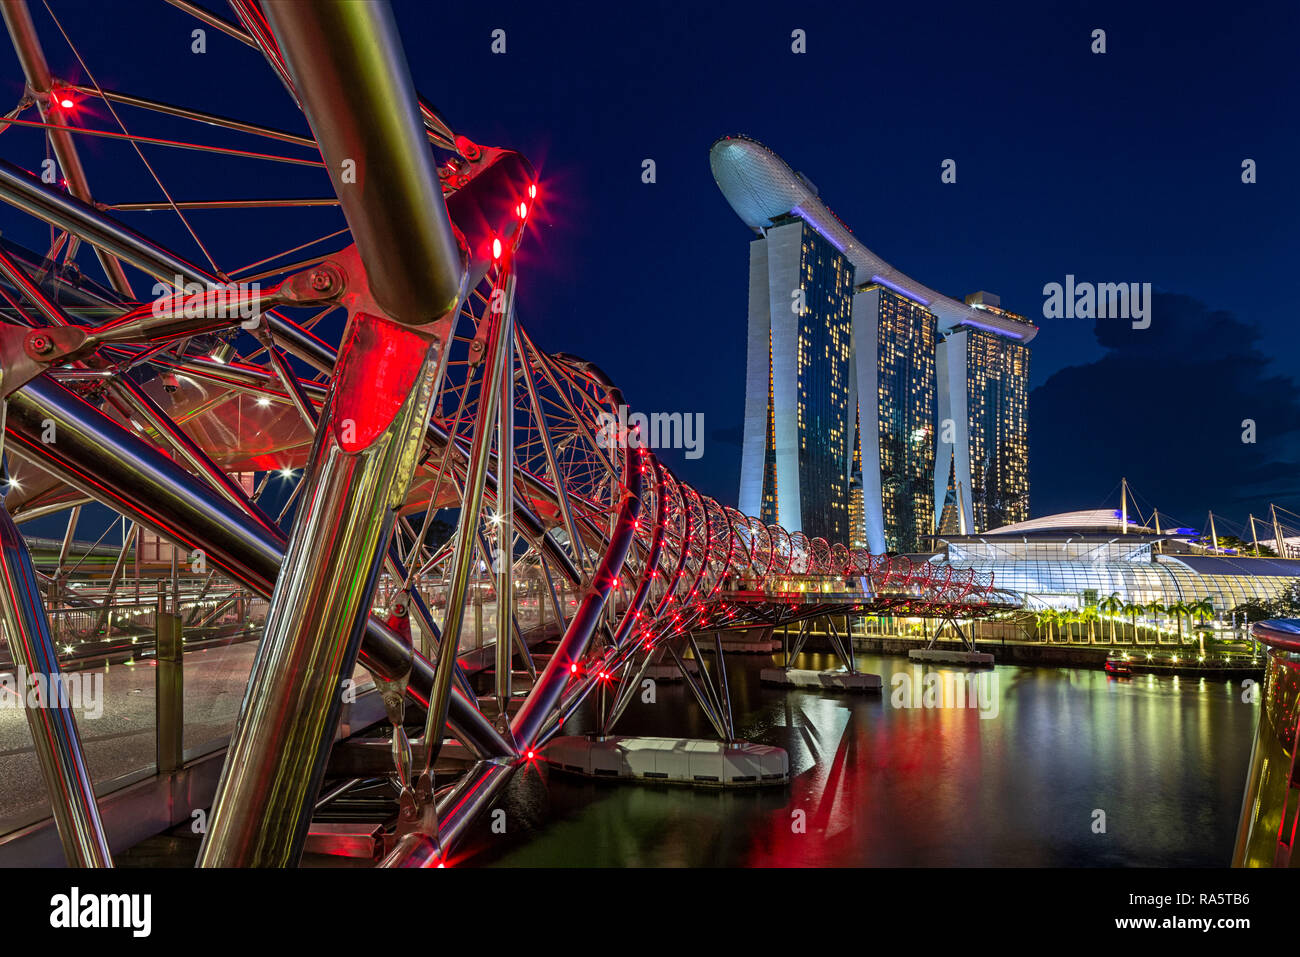 Marina Bay Sands Hotel and Helix Bridge - Singapore Stock Photo